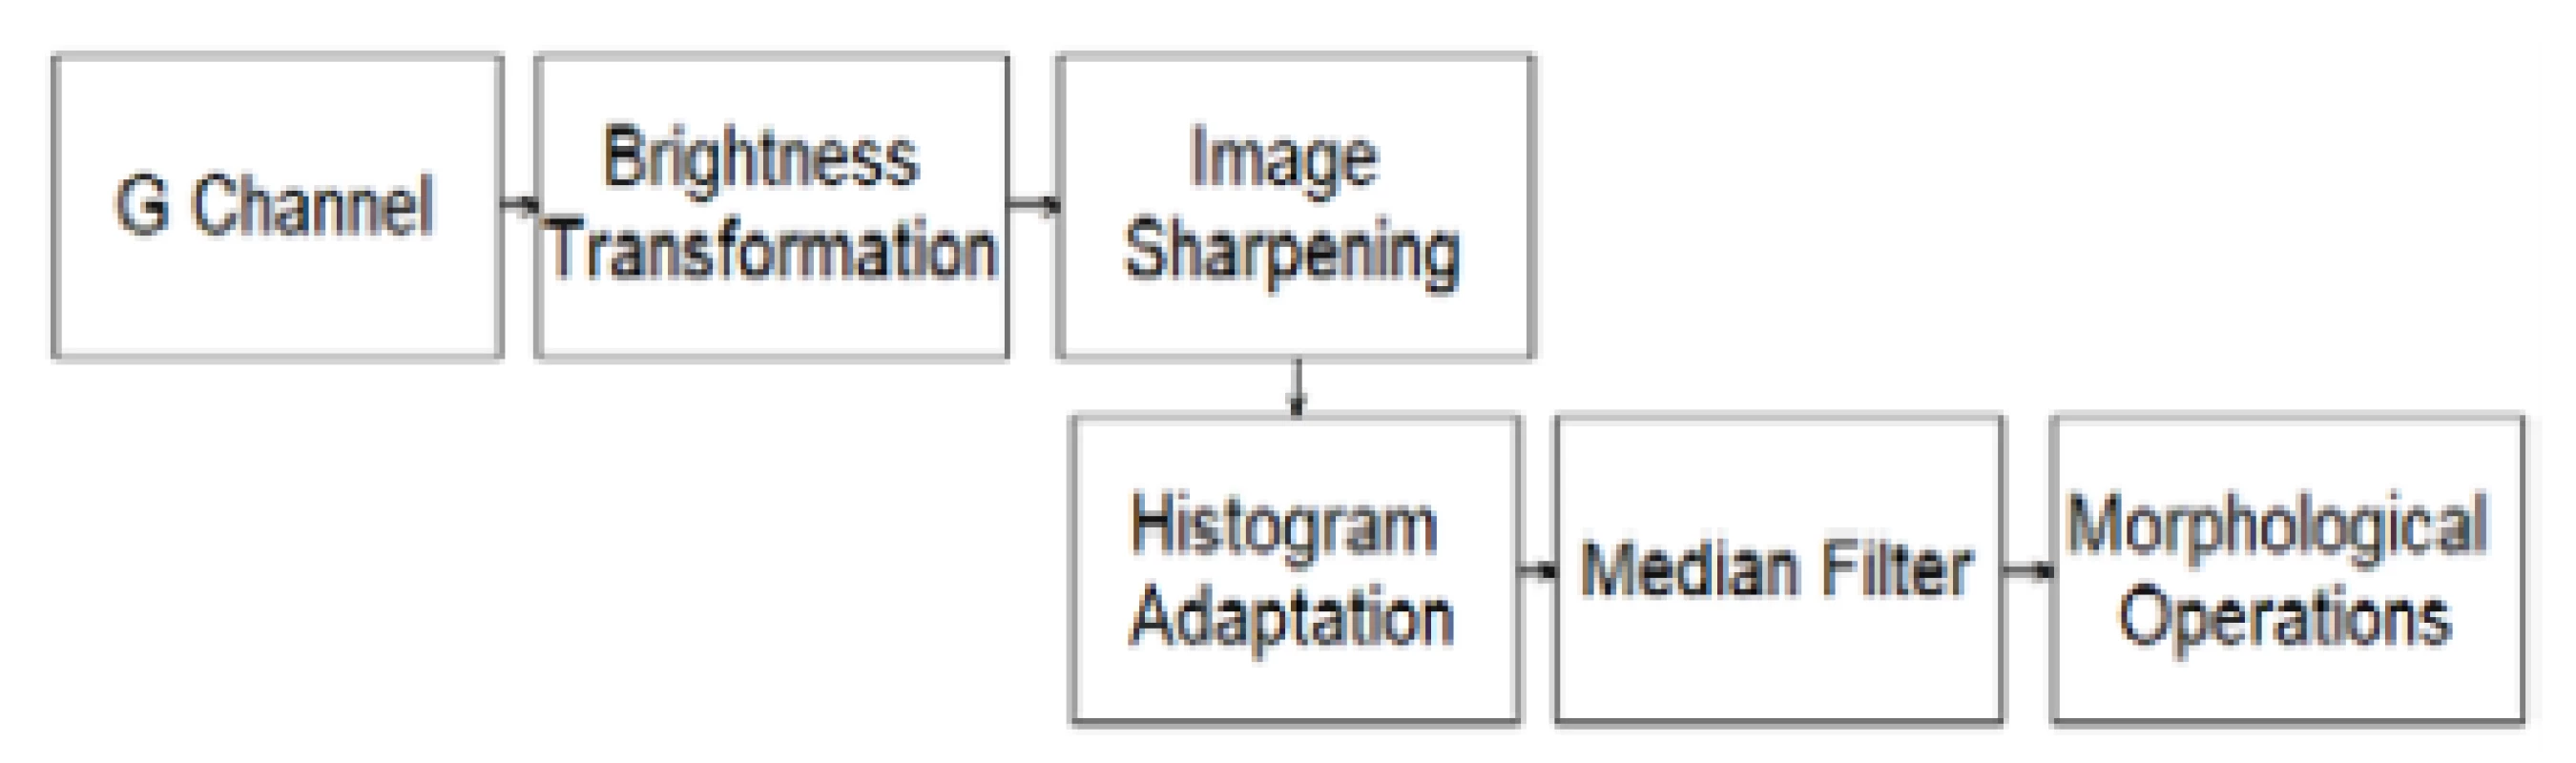 Design of an algorithm for preprocessing
image.